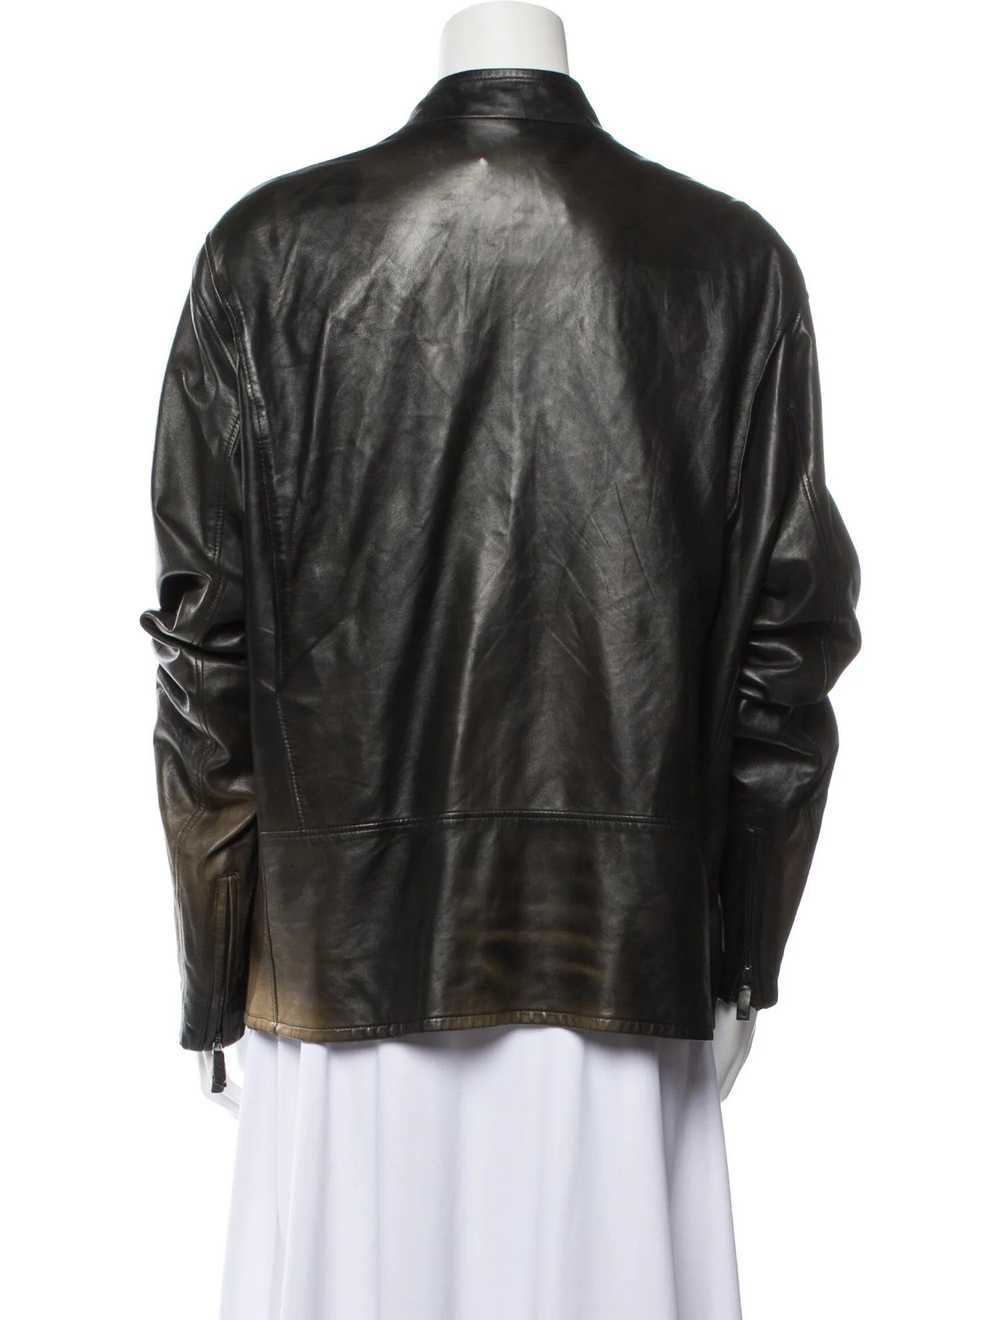 Ralph Lauren Black Label Black Moto Leather Jacket - image 8